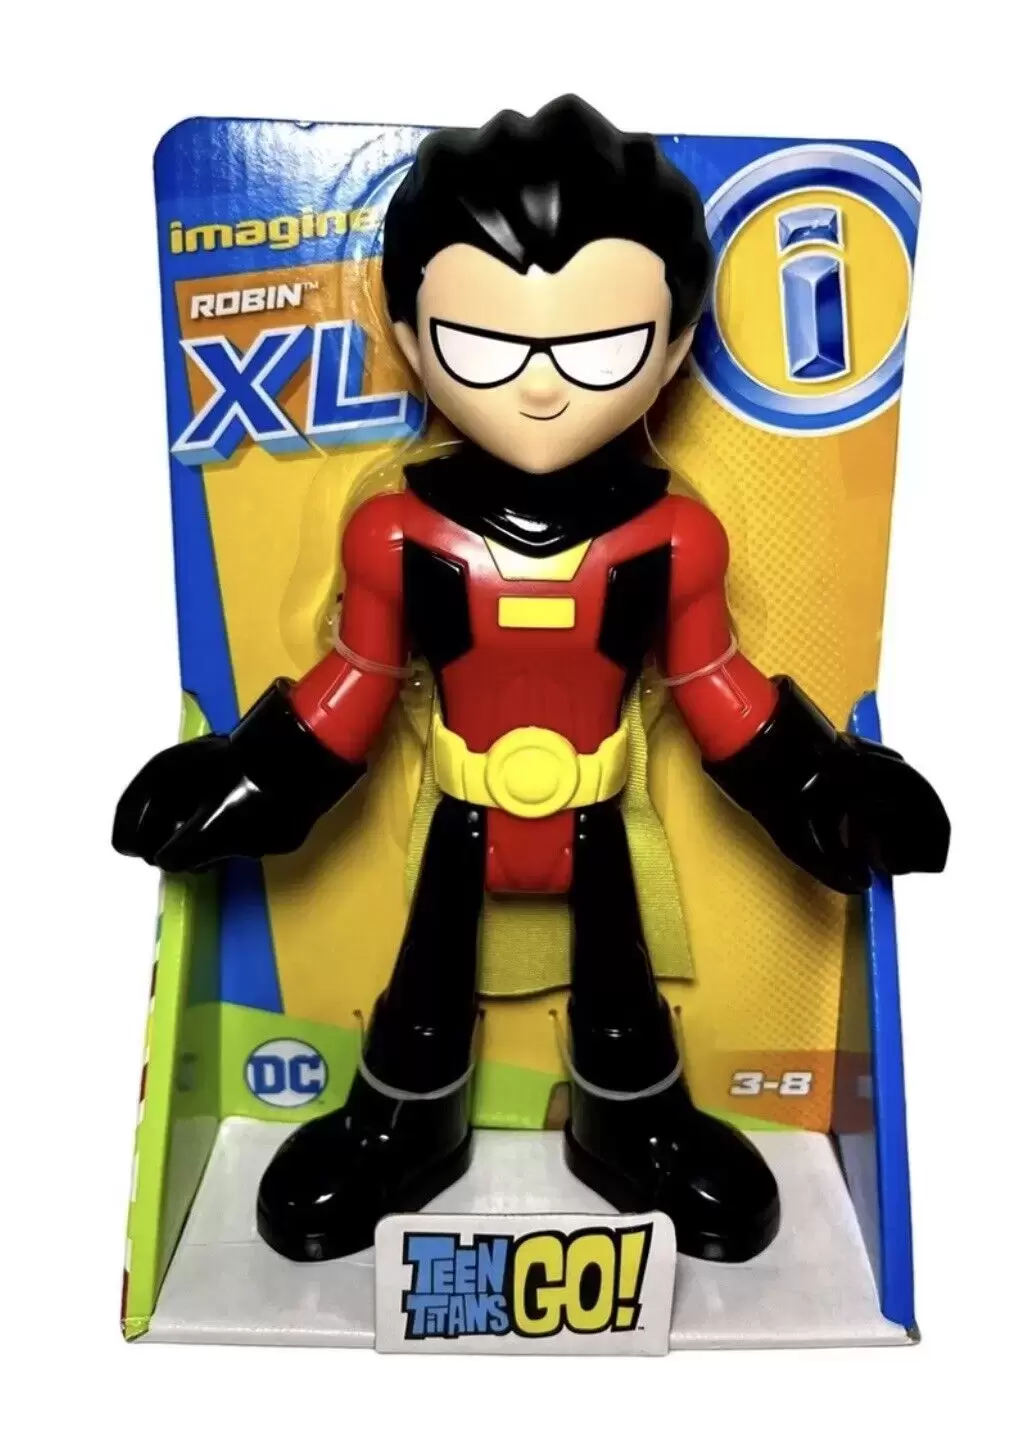 Imaginext XL - Teen Titans - Robin